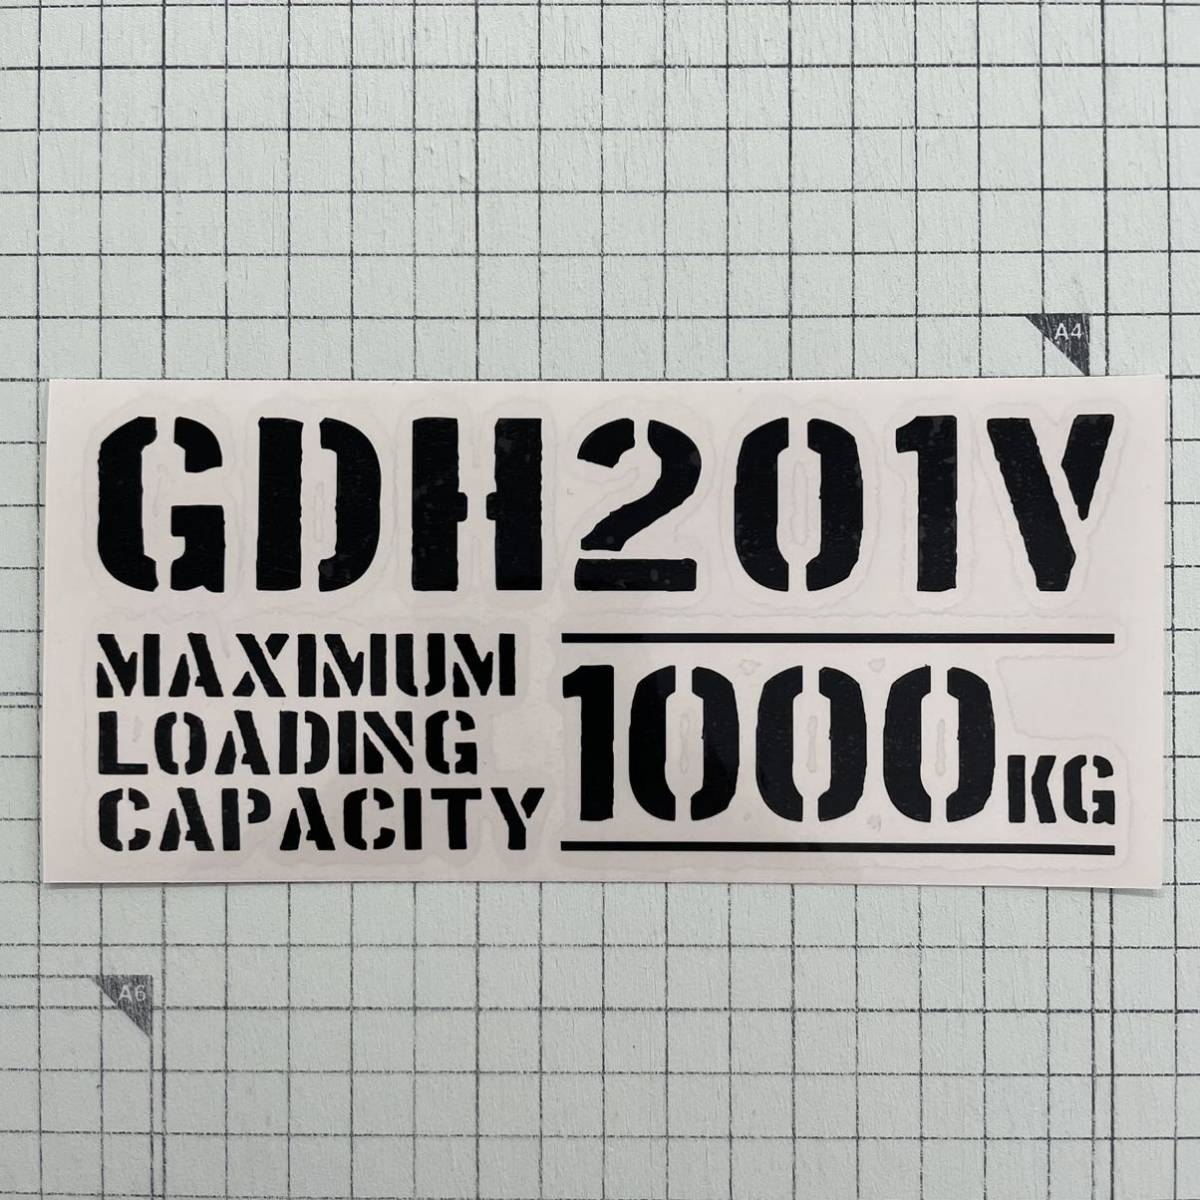 GDH201V ハイエース 最大積載量 1000kg ステッカー 黒色_画像1